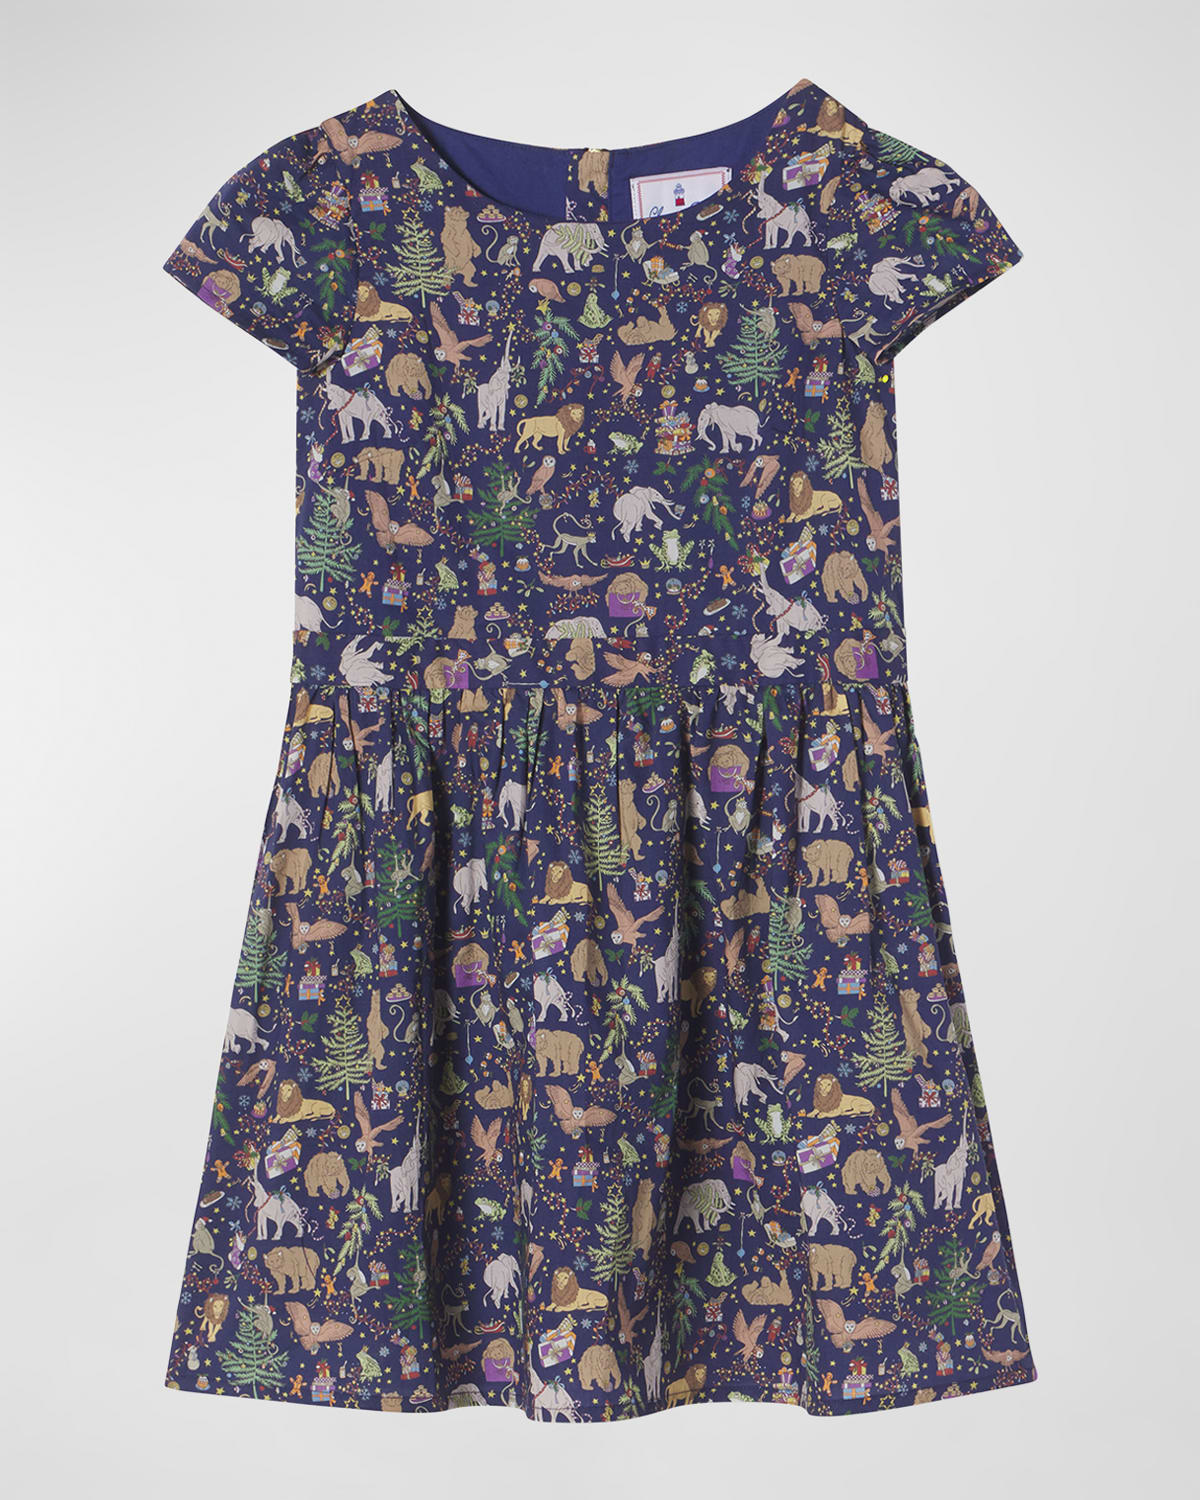 Classic Prep Childrenswear Kids' Girl's Tilly Liberty Christmas-print Dress